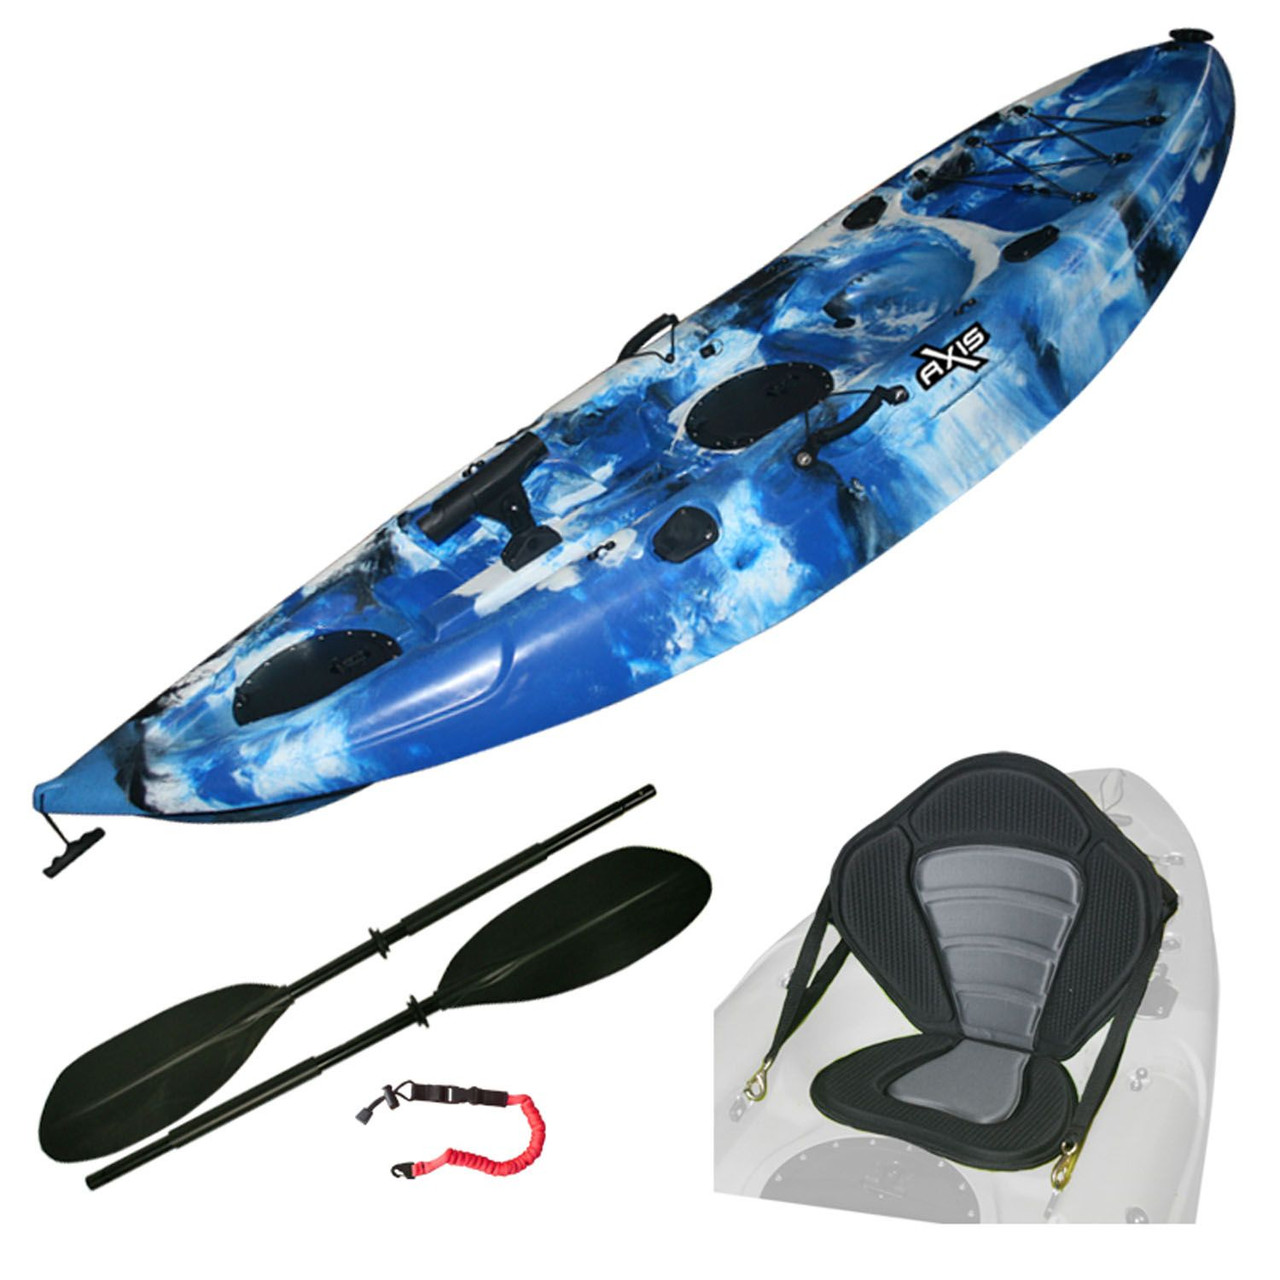 Kayak Accessories: Buying Guide